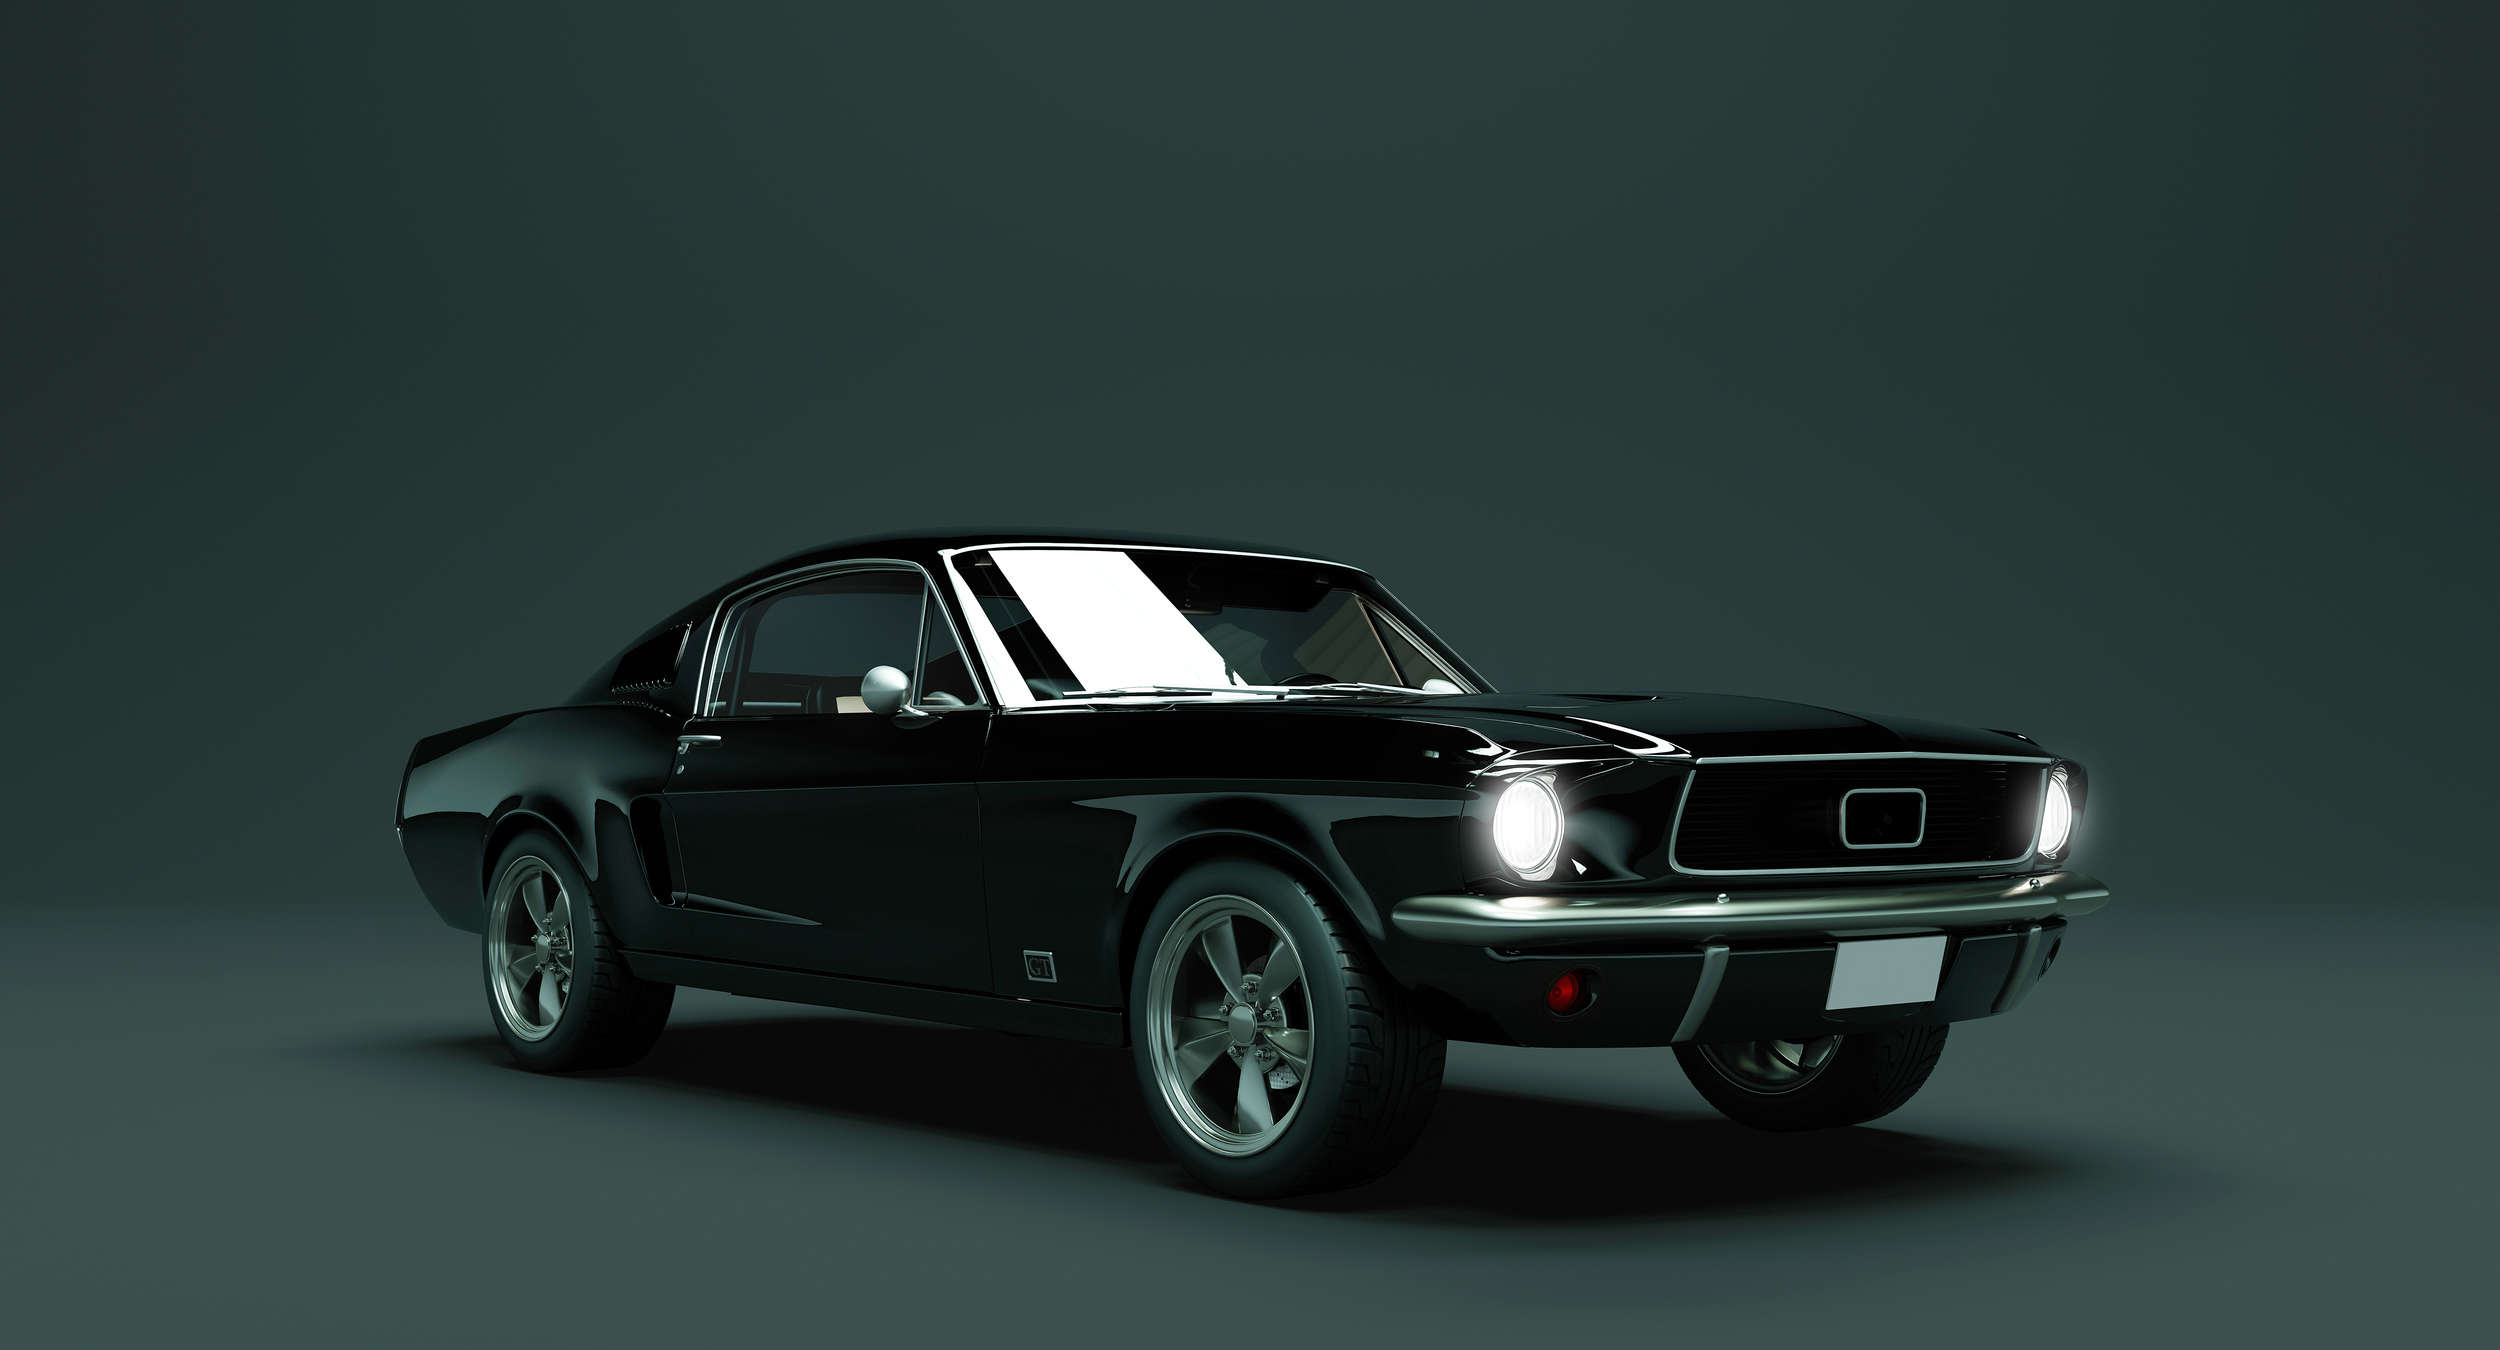             Mustang 2 - Photo wallpaper, Mustang 1968 Vintage Car - Blue, Black | Textured non-woven
        